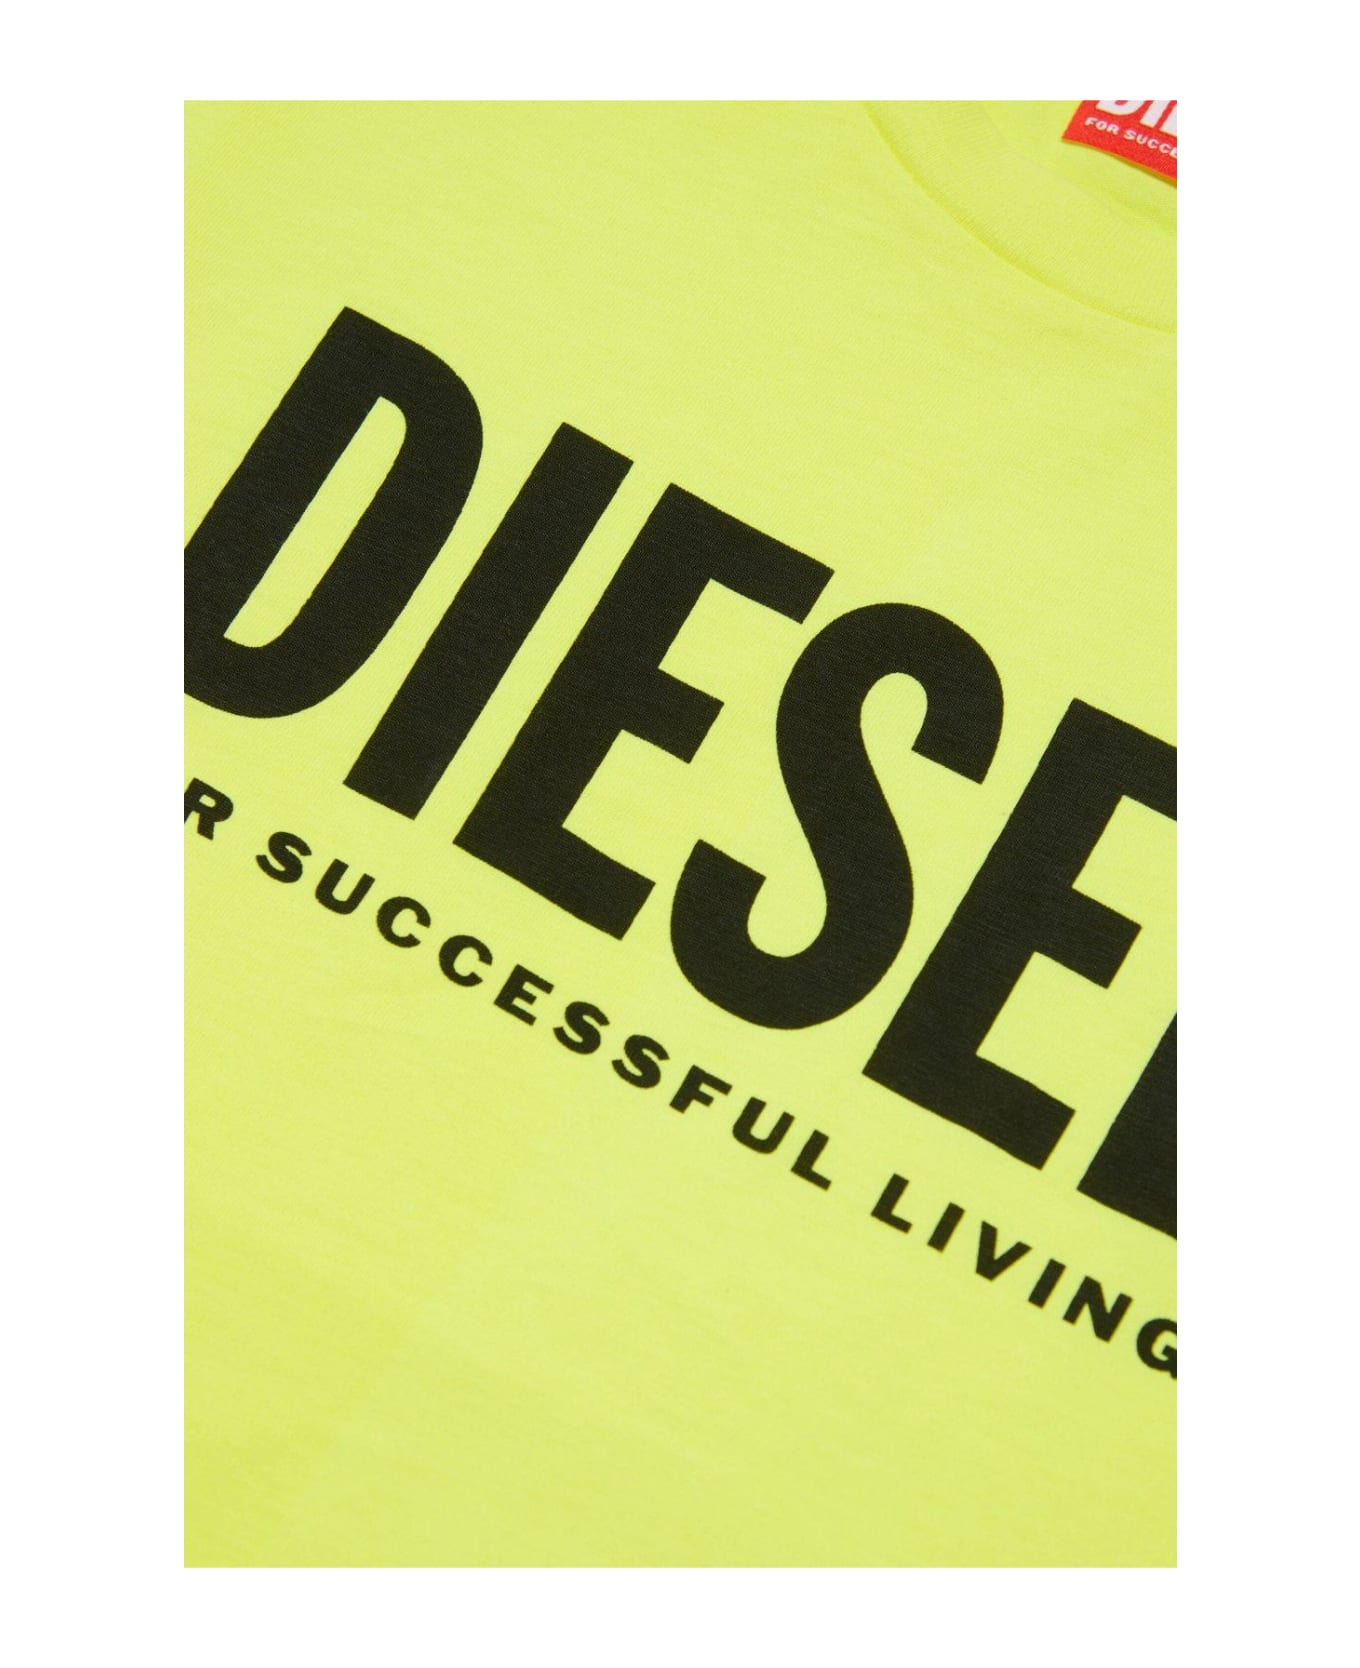 Diesel Tnuci Logo Printed Crewneck T-shirt Tシャツ＆ポロシャツ